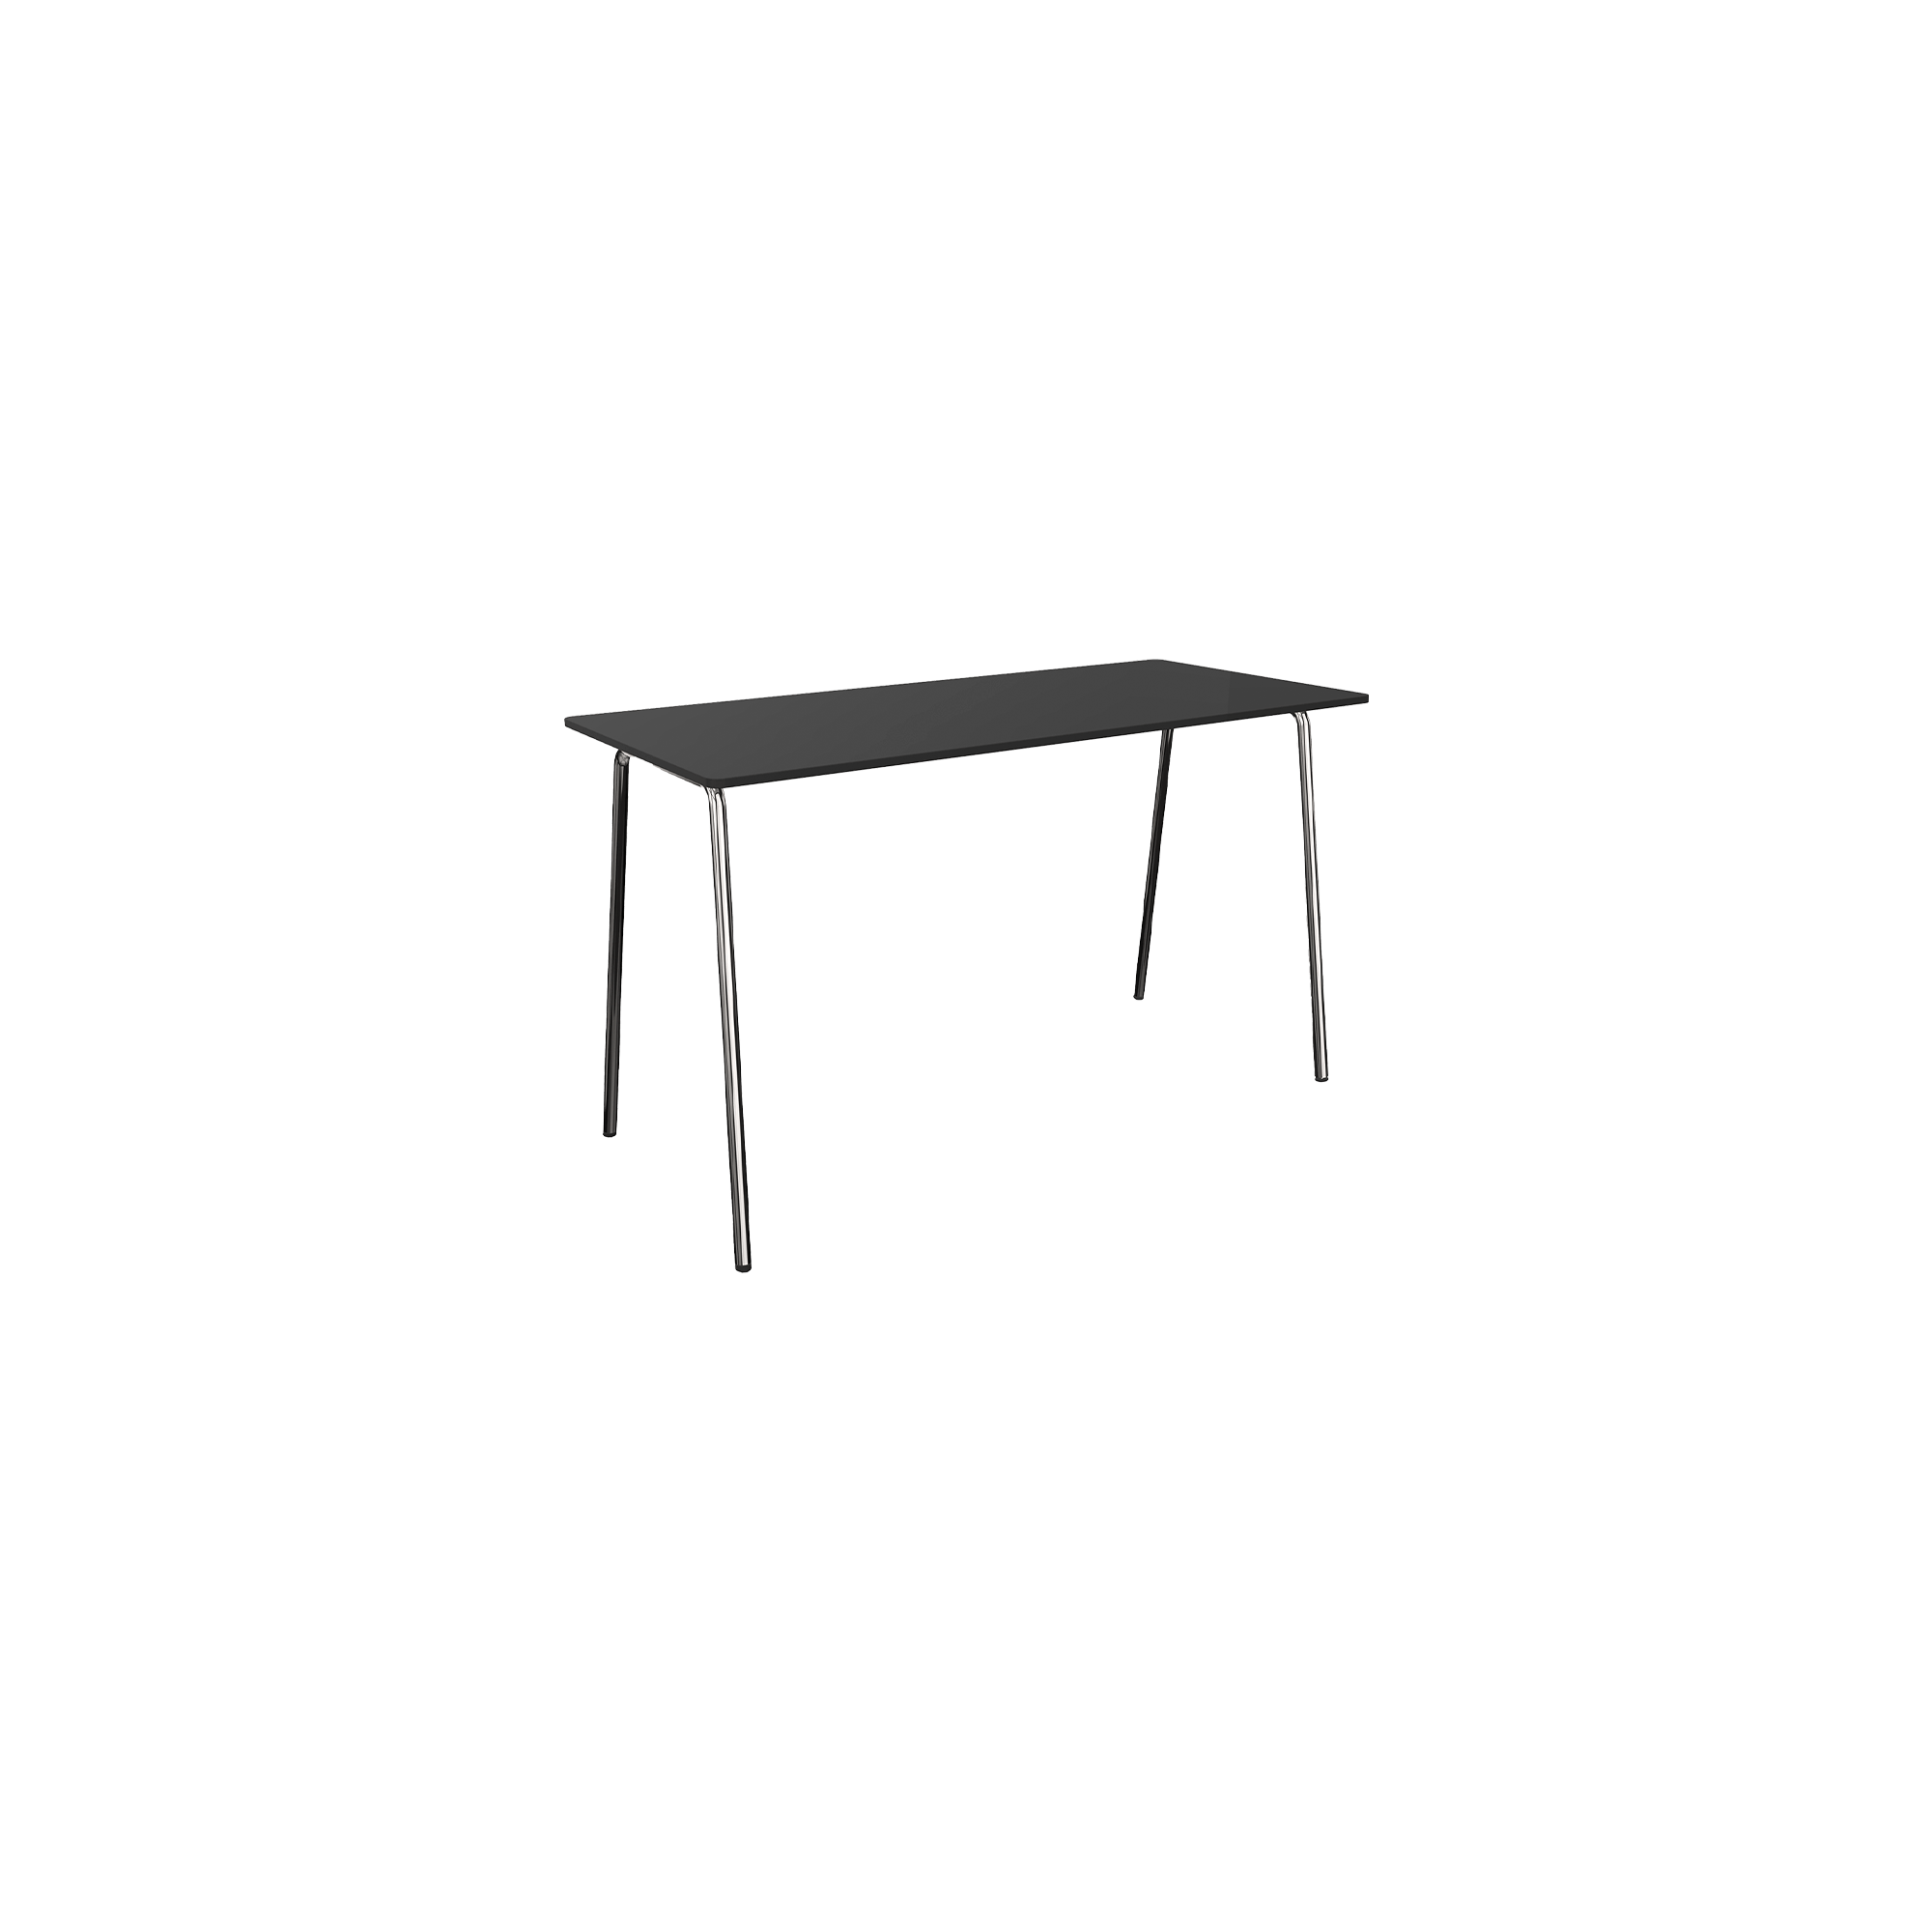 Small black rectangular table with 4 chrone legs